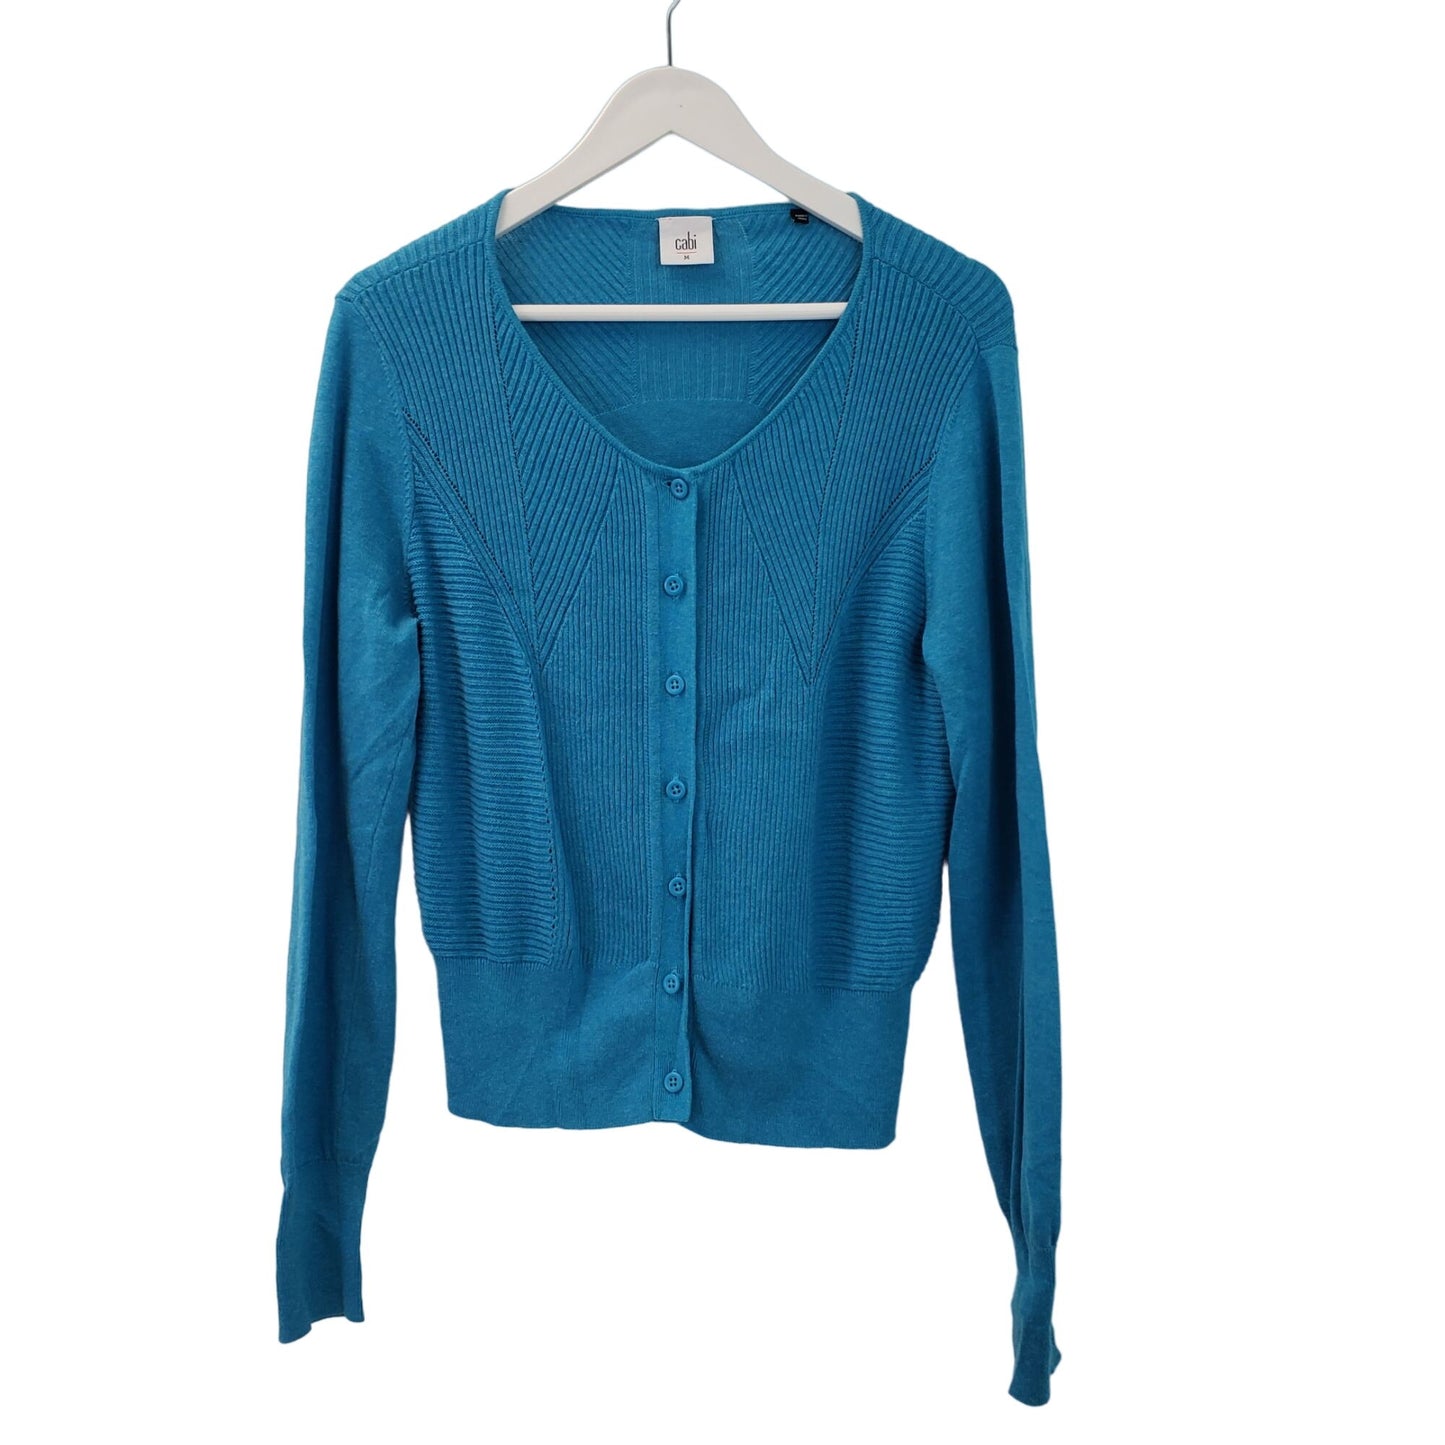 Cabi Blue Darby Ribbed Knit Cardigan Sweater Size Medium